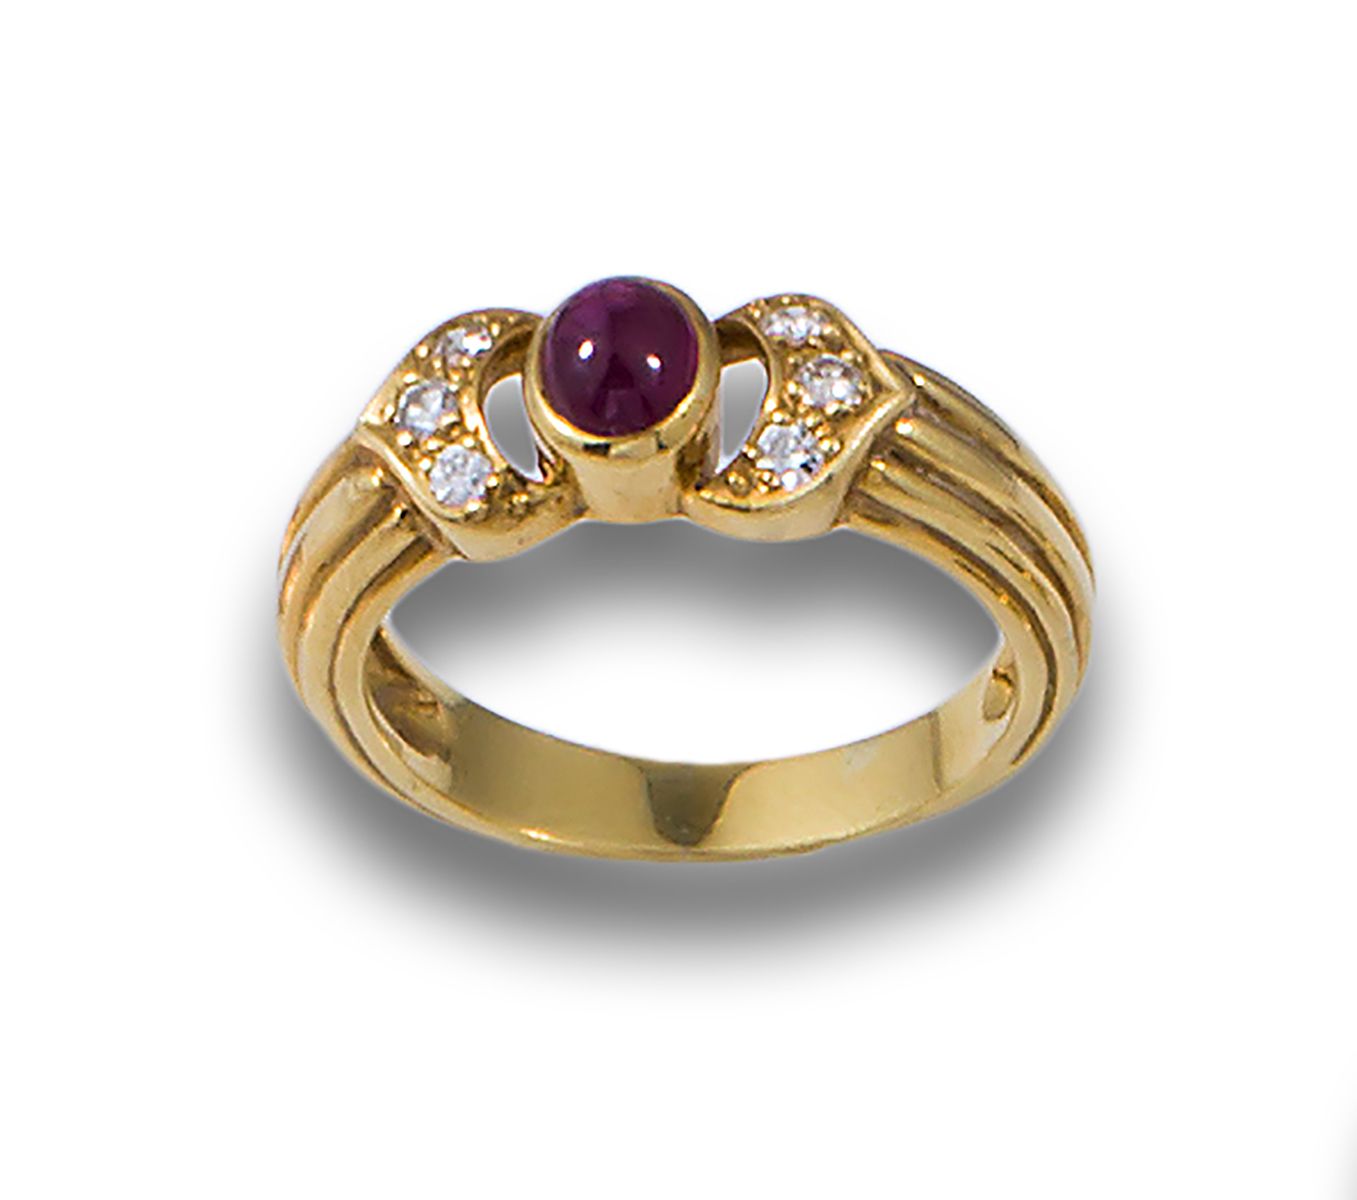 RUBY CABOCHON RING, AND BRILLIANTS, YELLOW GOLD Ring aus 18kt Gelbgold mit einem&hellip;